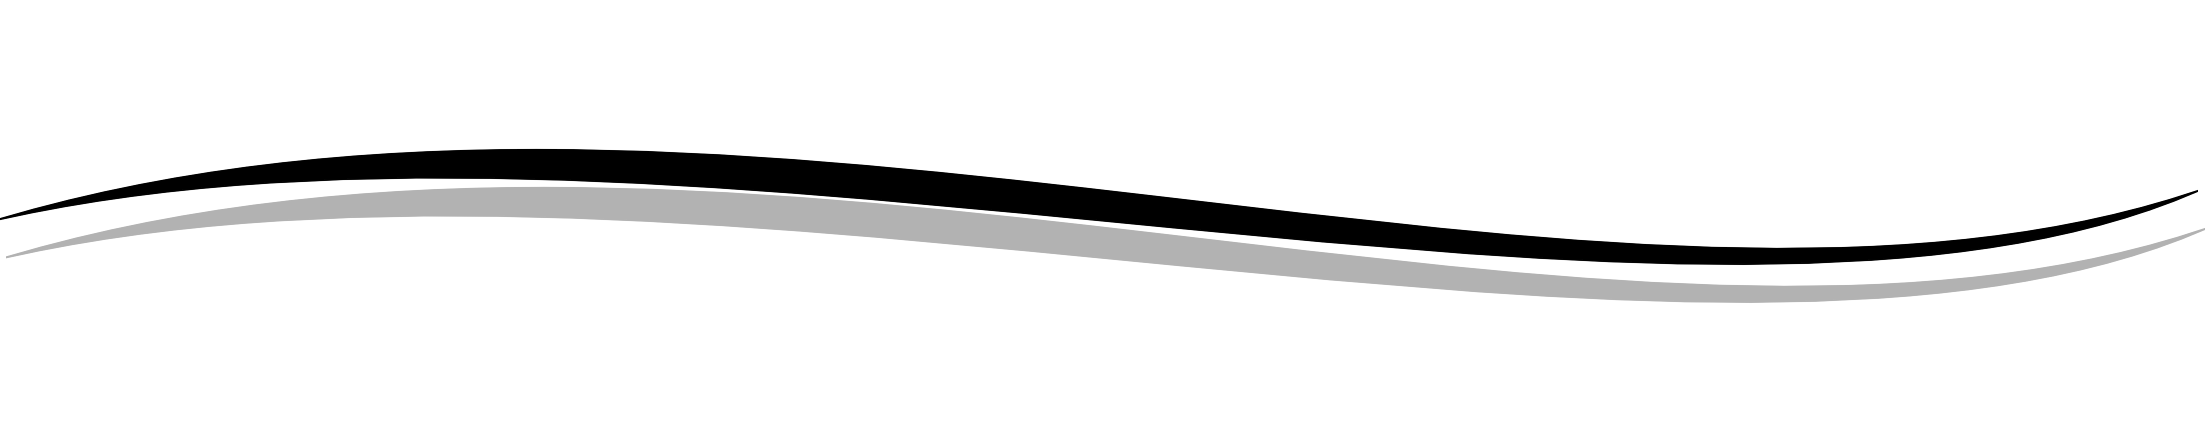 Line Separator Clipart